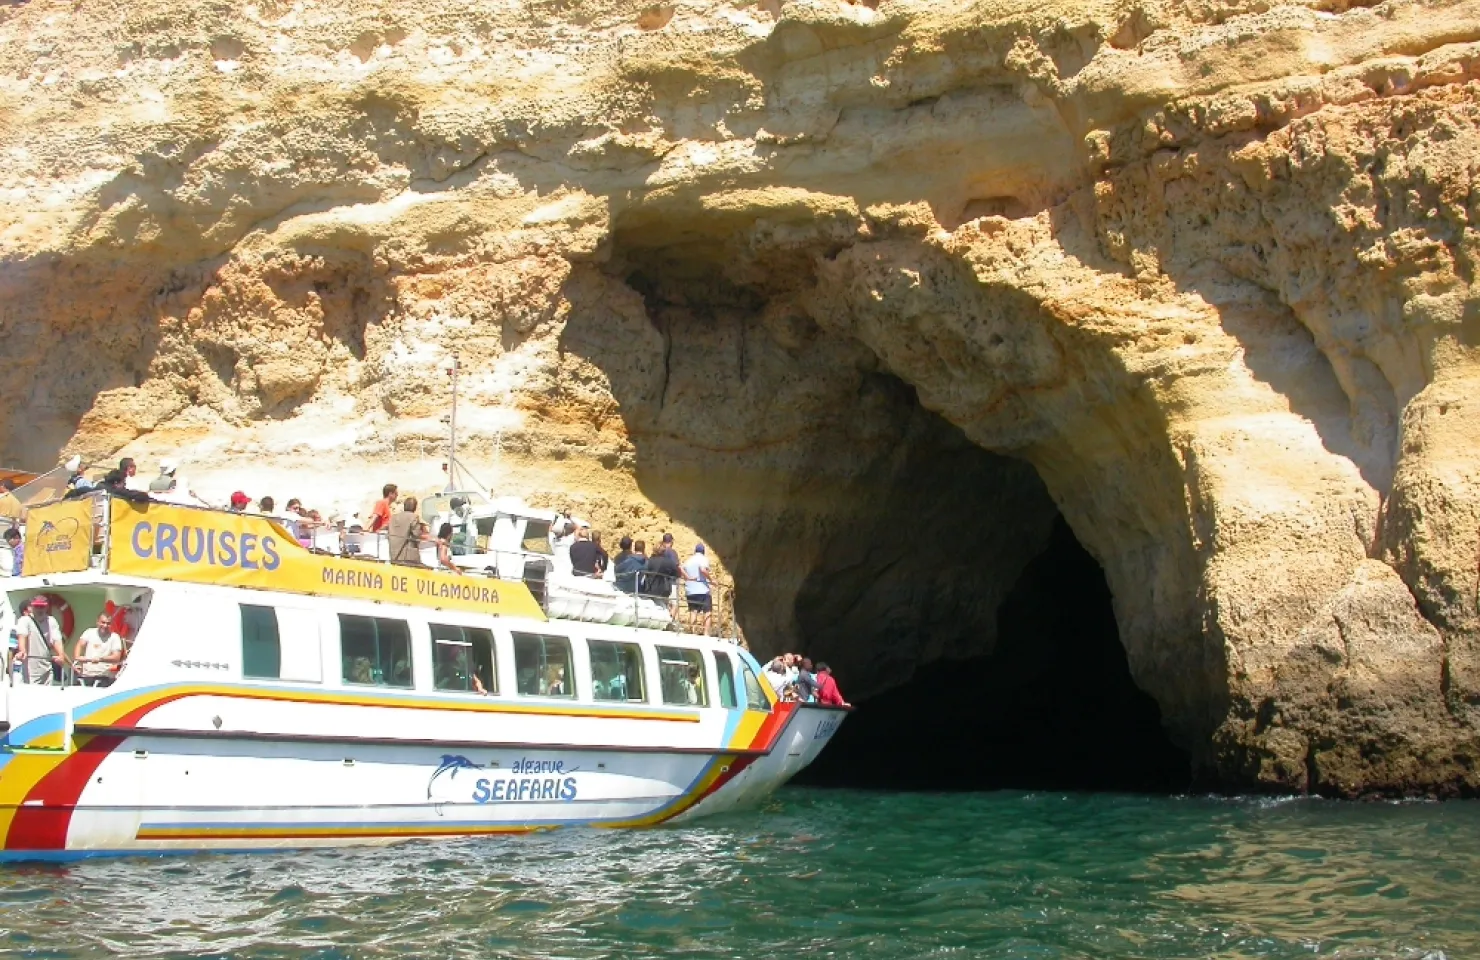 Algarve Sea Cave Tour - Albufeira Boat Trips